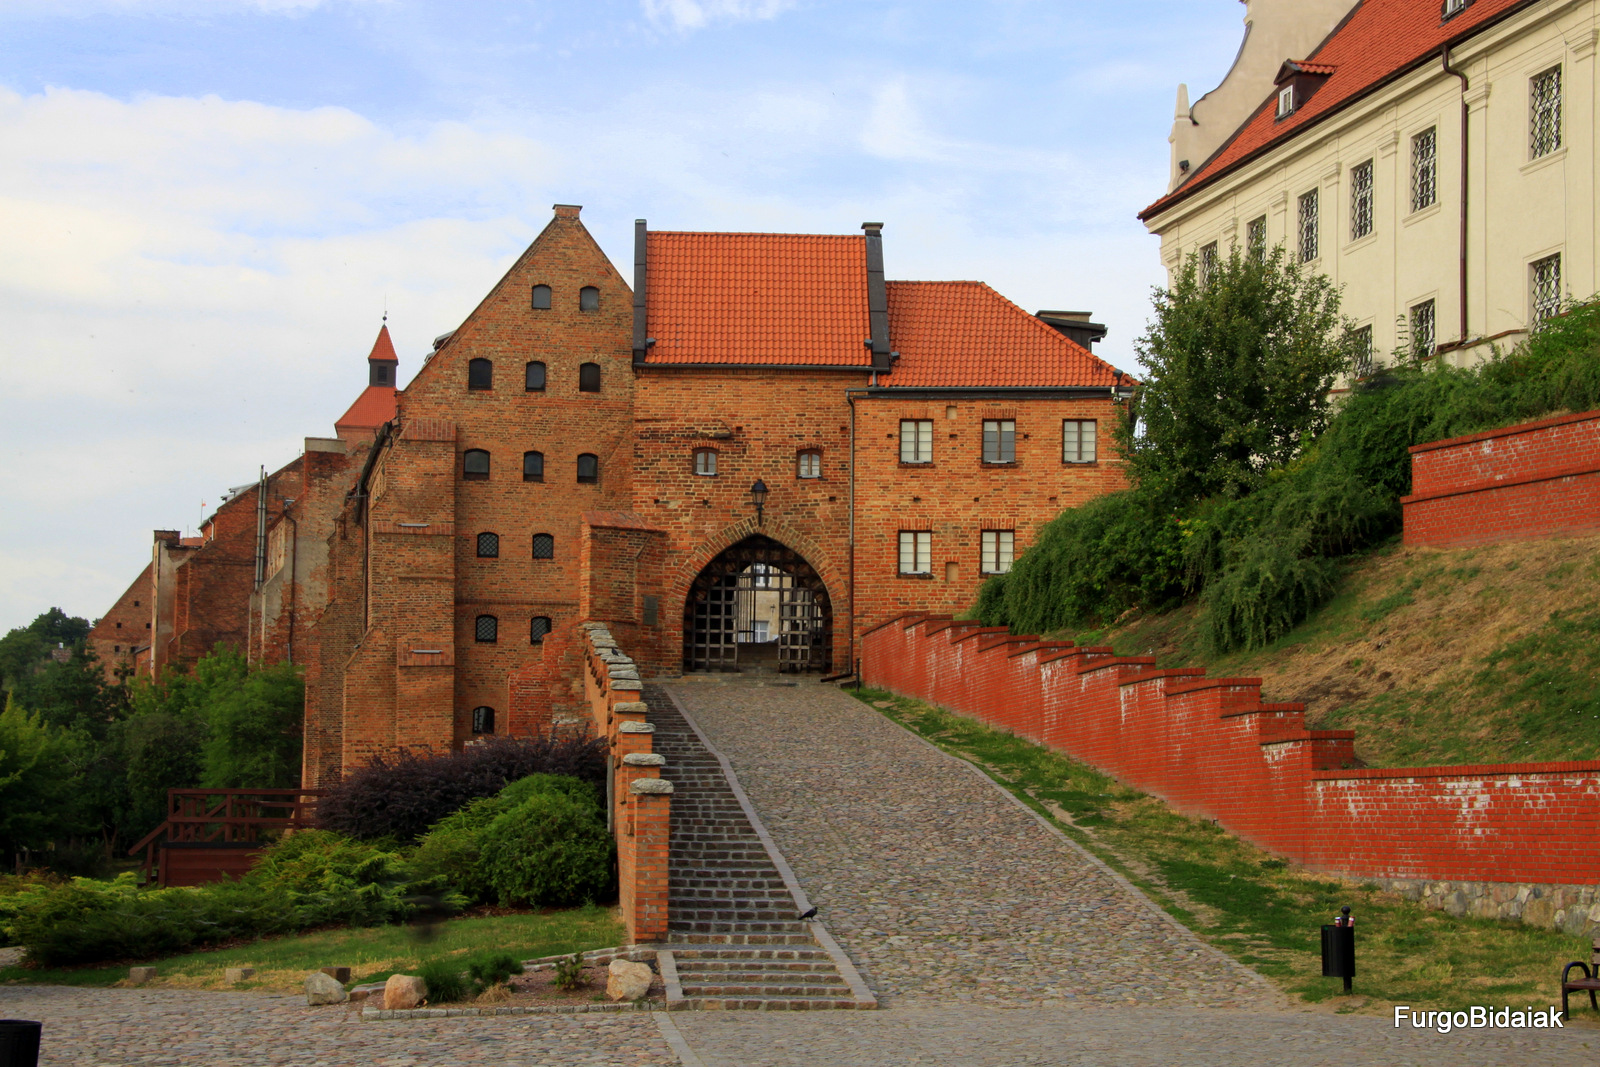  Grudziadz, ruta de los caballeros teutónicos, Polonia